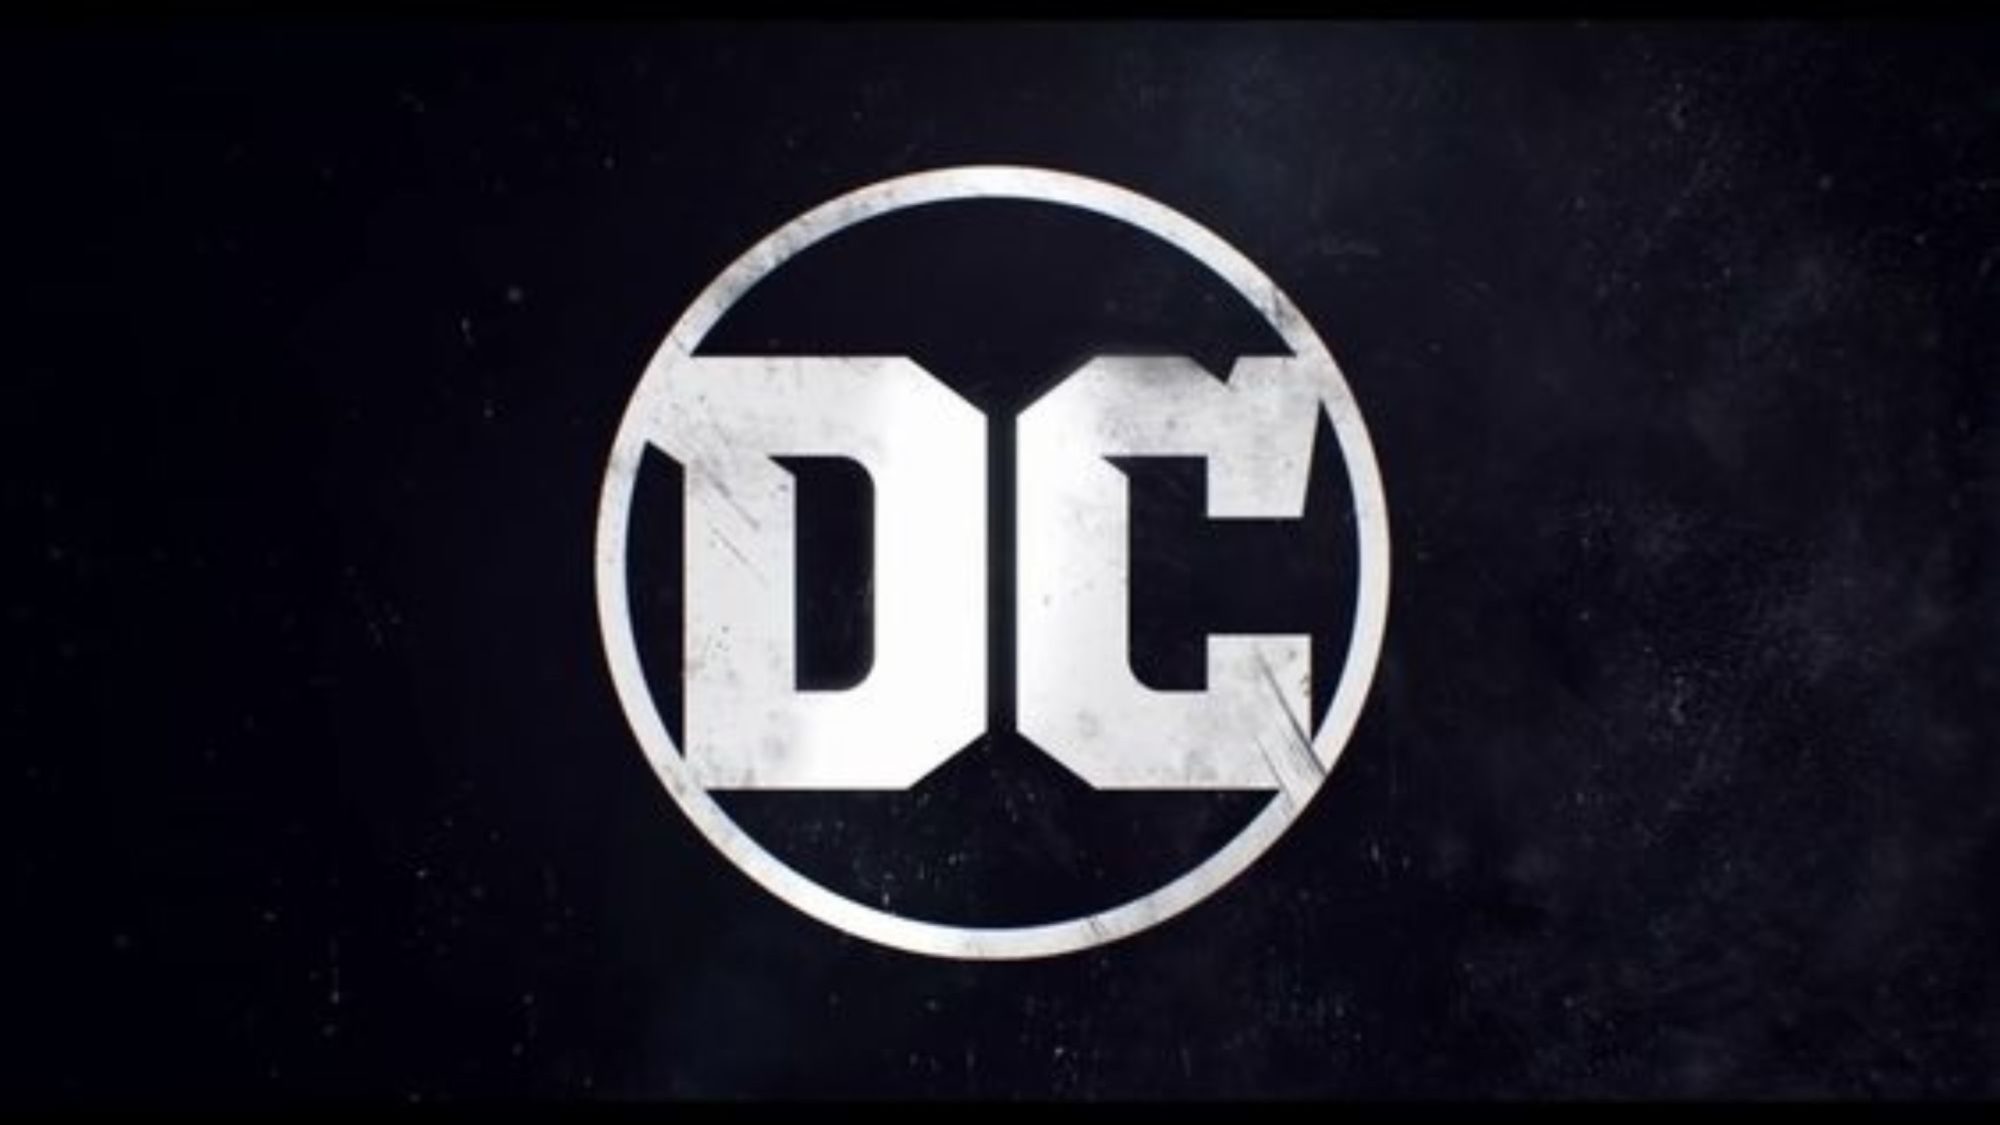 DC Comics Trademarks DC Metal Force Ahead Of Big Plans